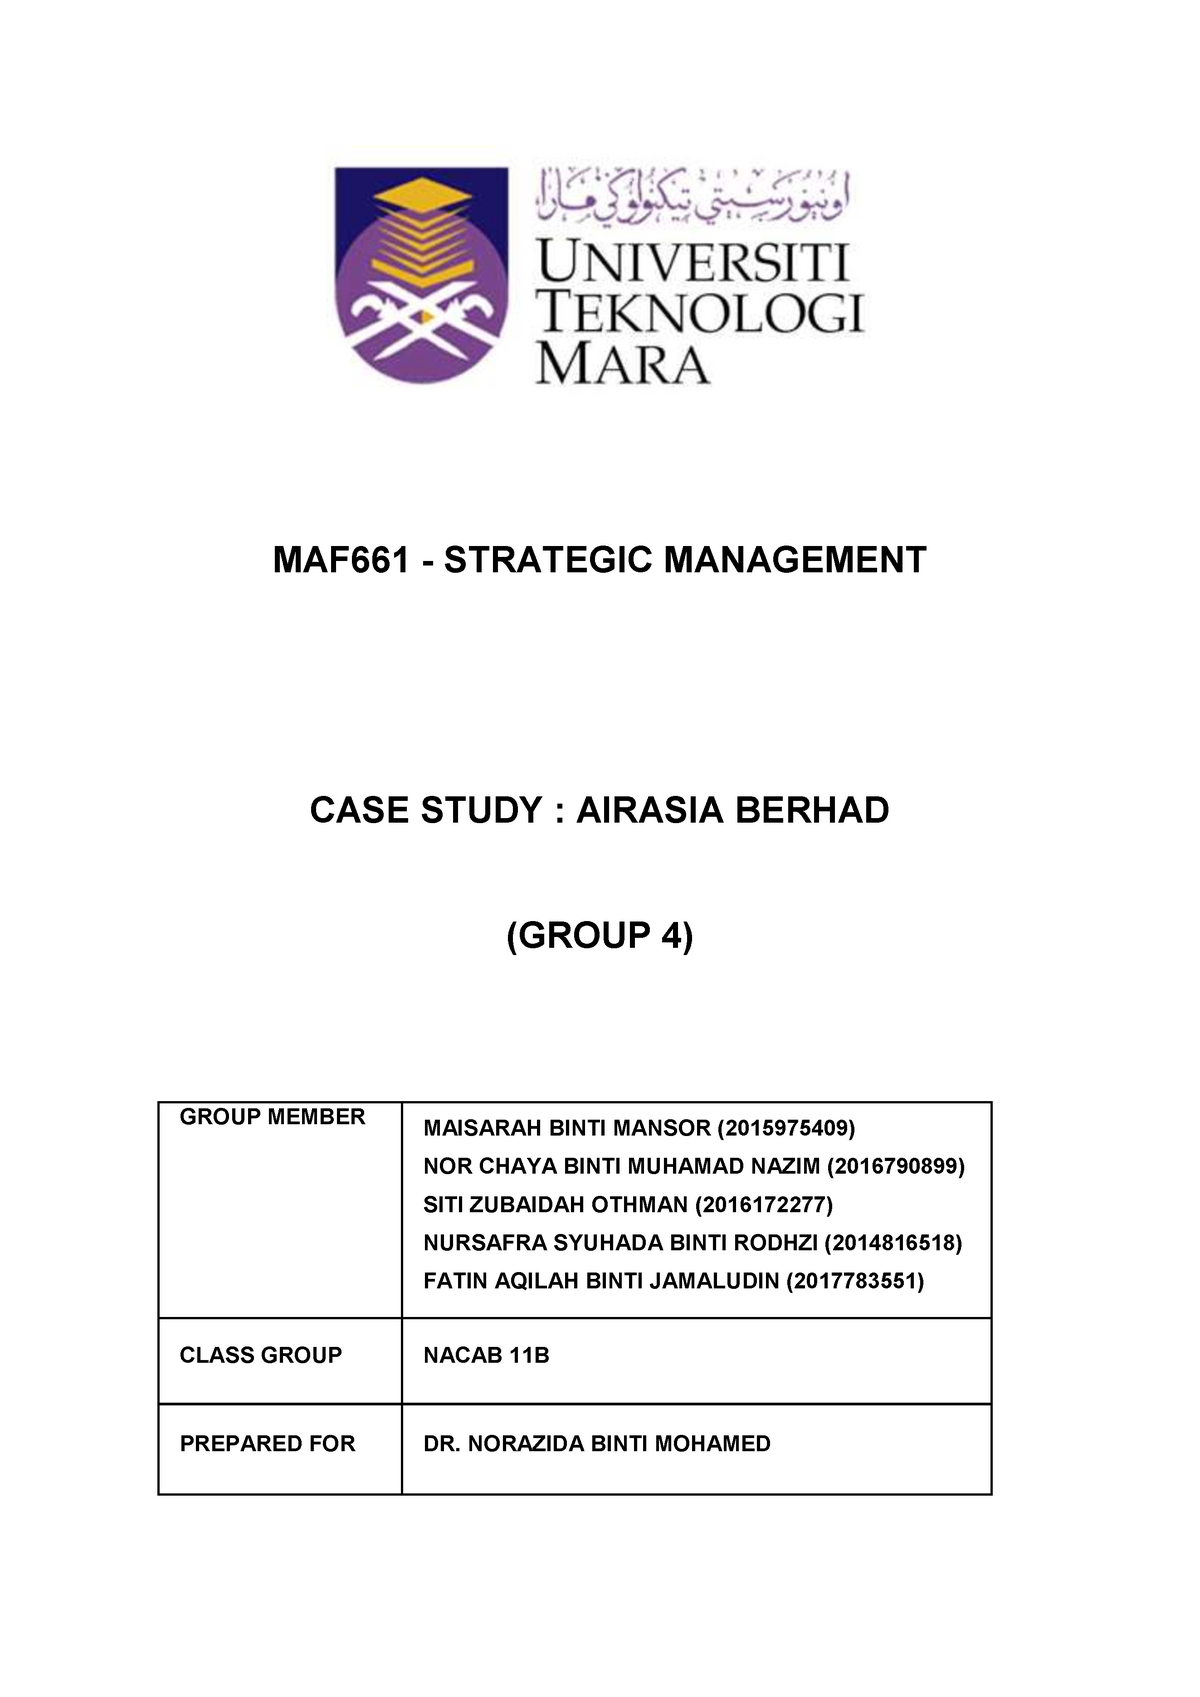 maf661 strategic management assignment